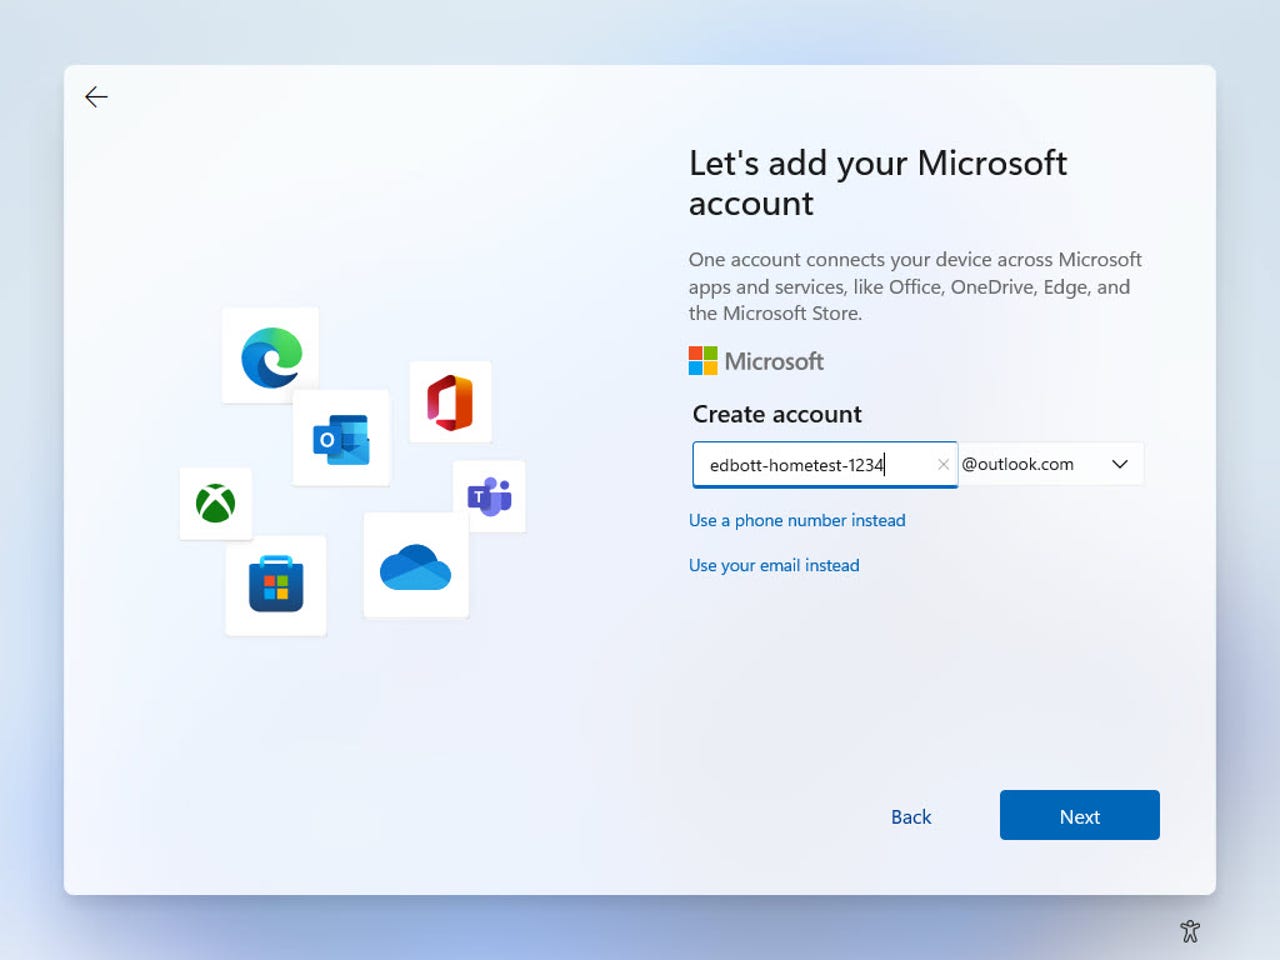 Windows 11 Home Vs Windows 11 Pro! (Comparison) (Review) 